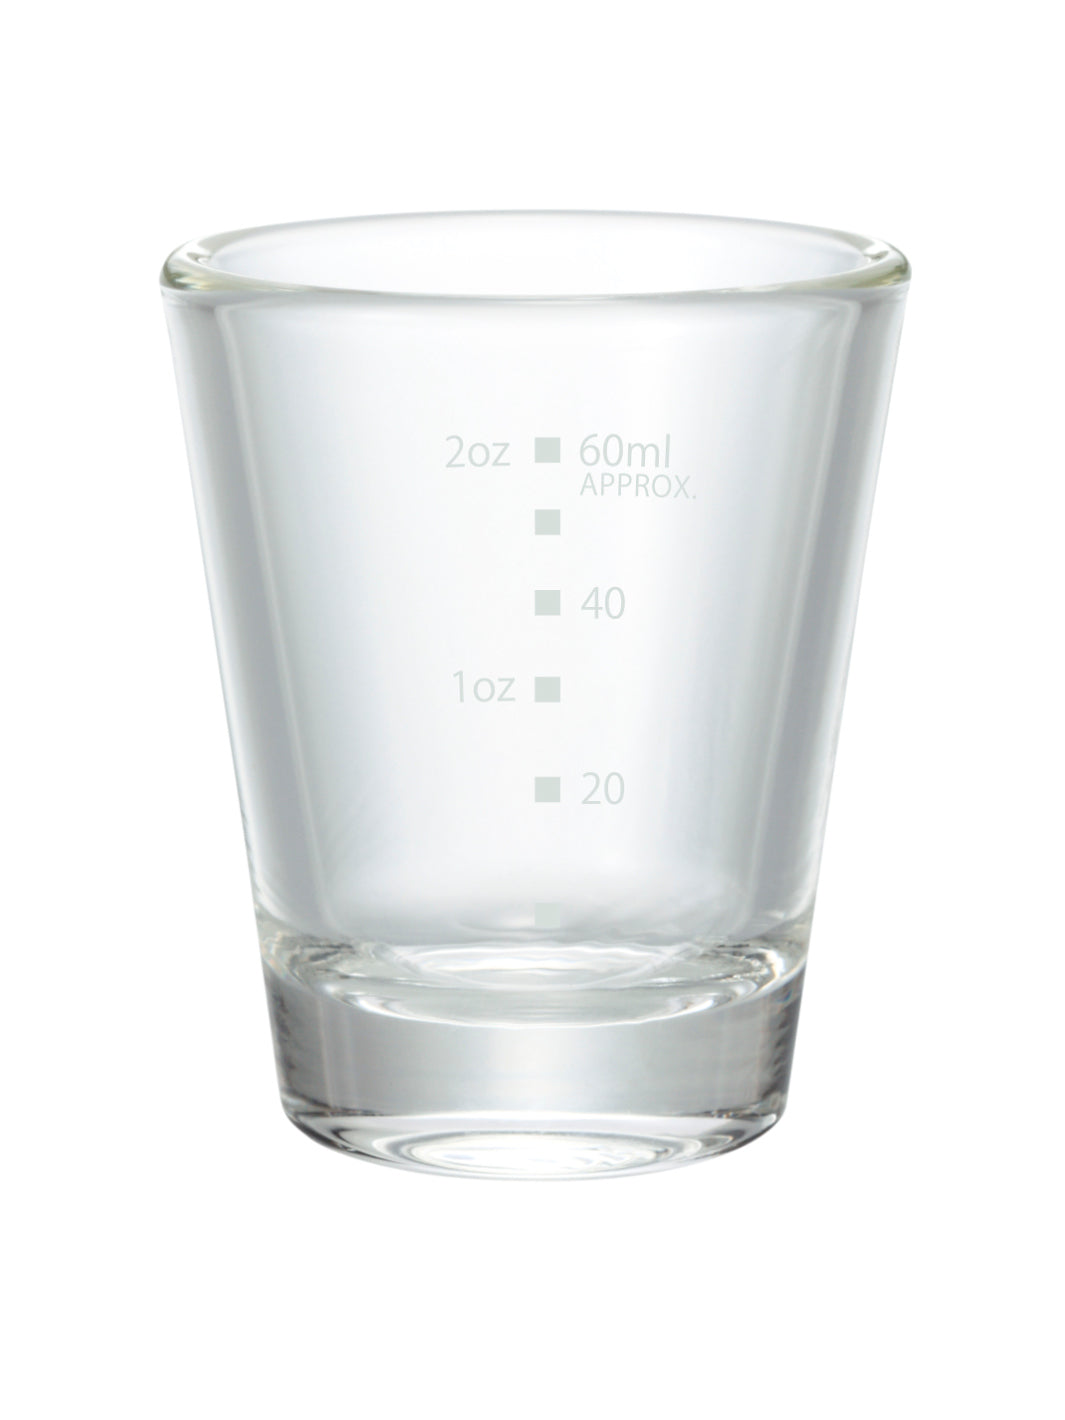 HARIO Shot Glass (80ml/3oz) – Hario Canada